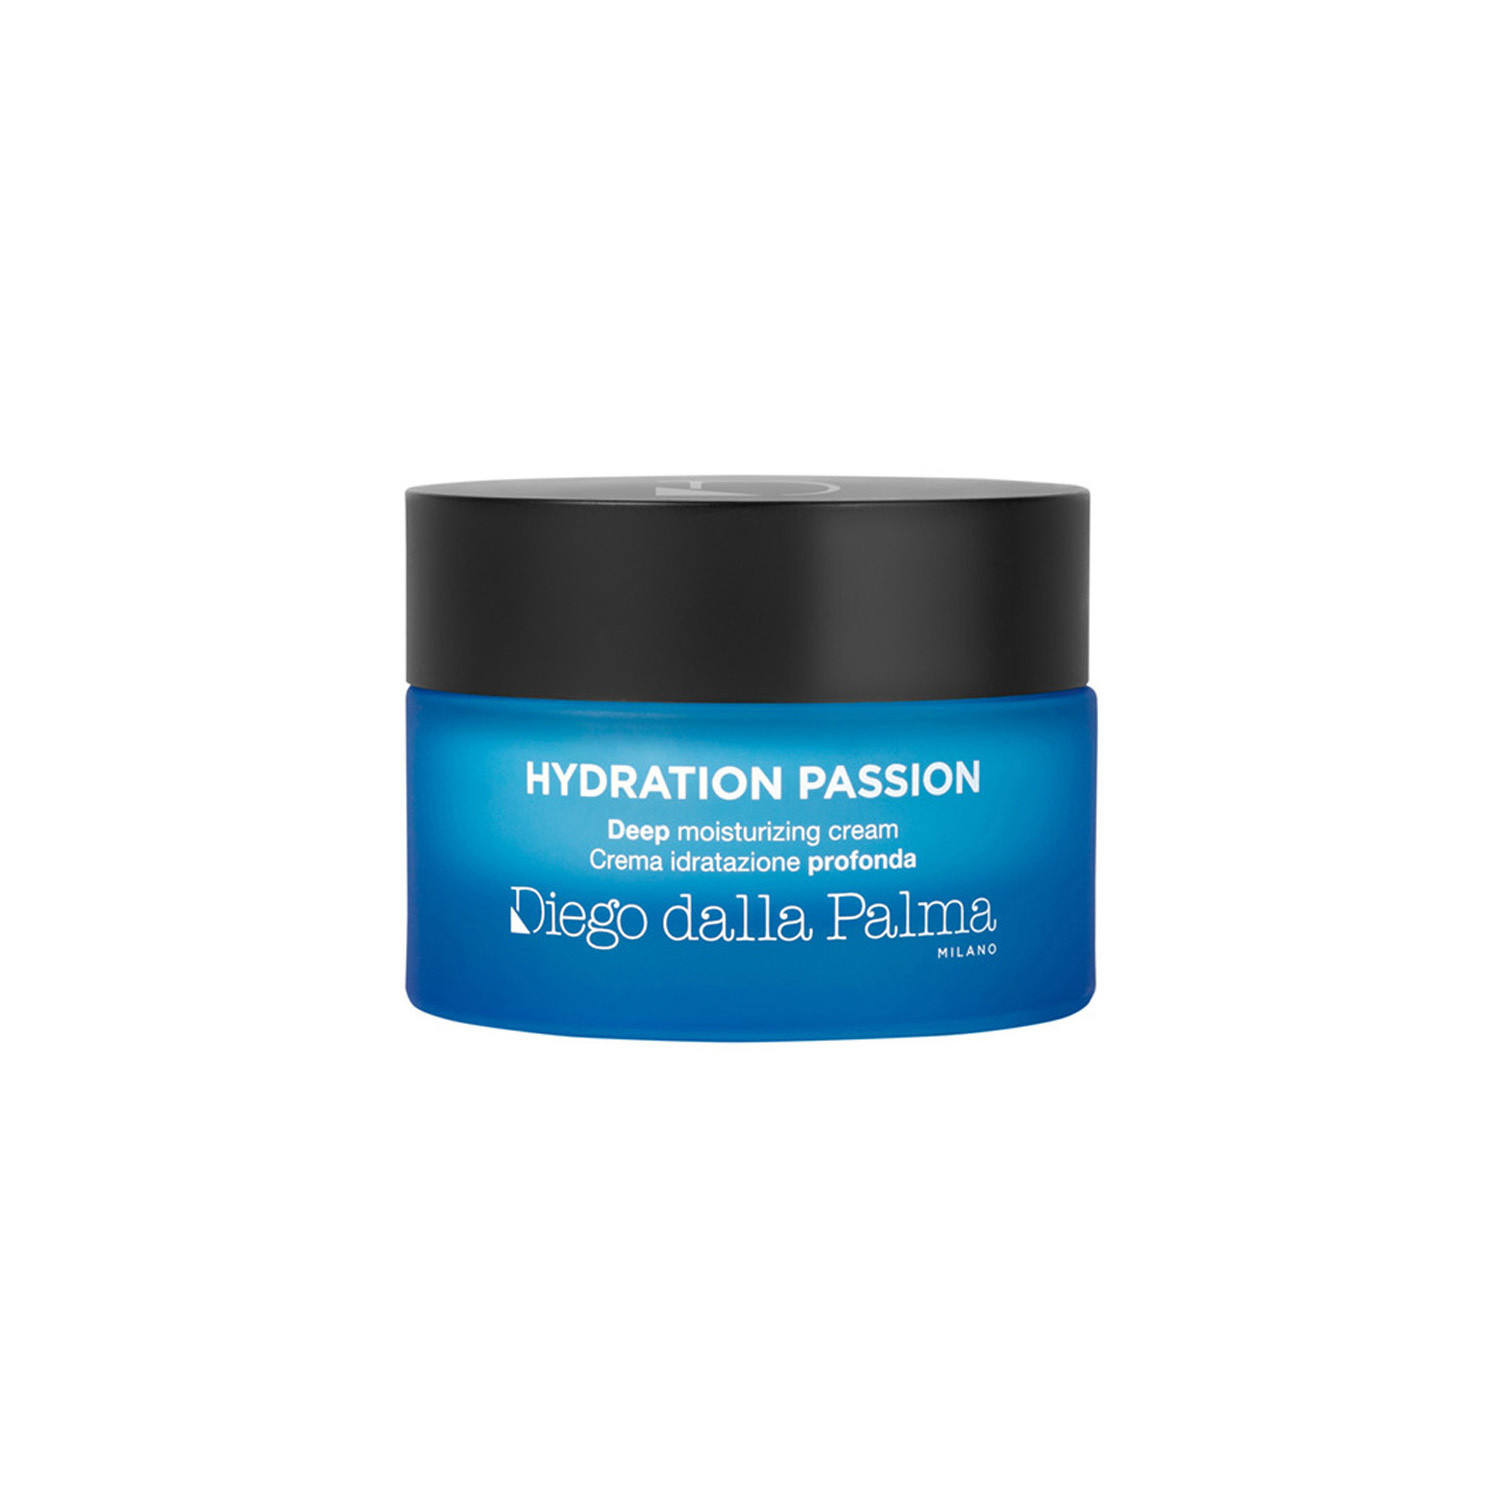 HYDRATION PASSION - Crema Idratazione Profonda, Blu chiaro, large image number 0